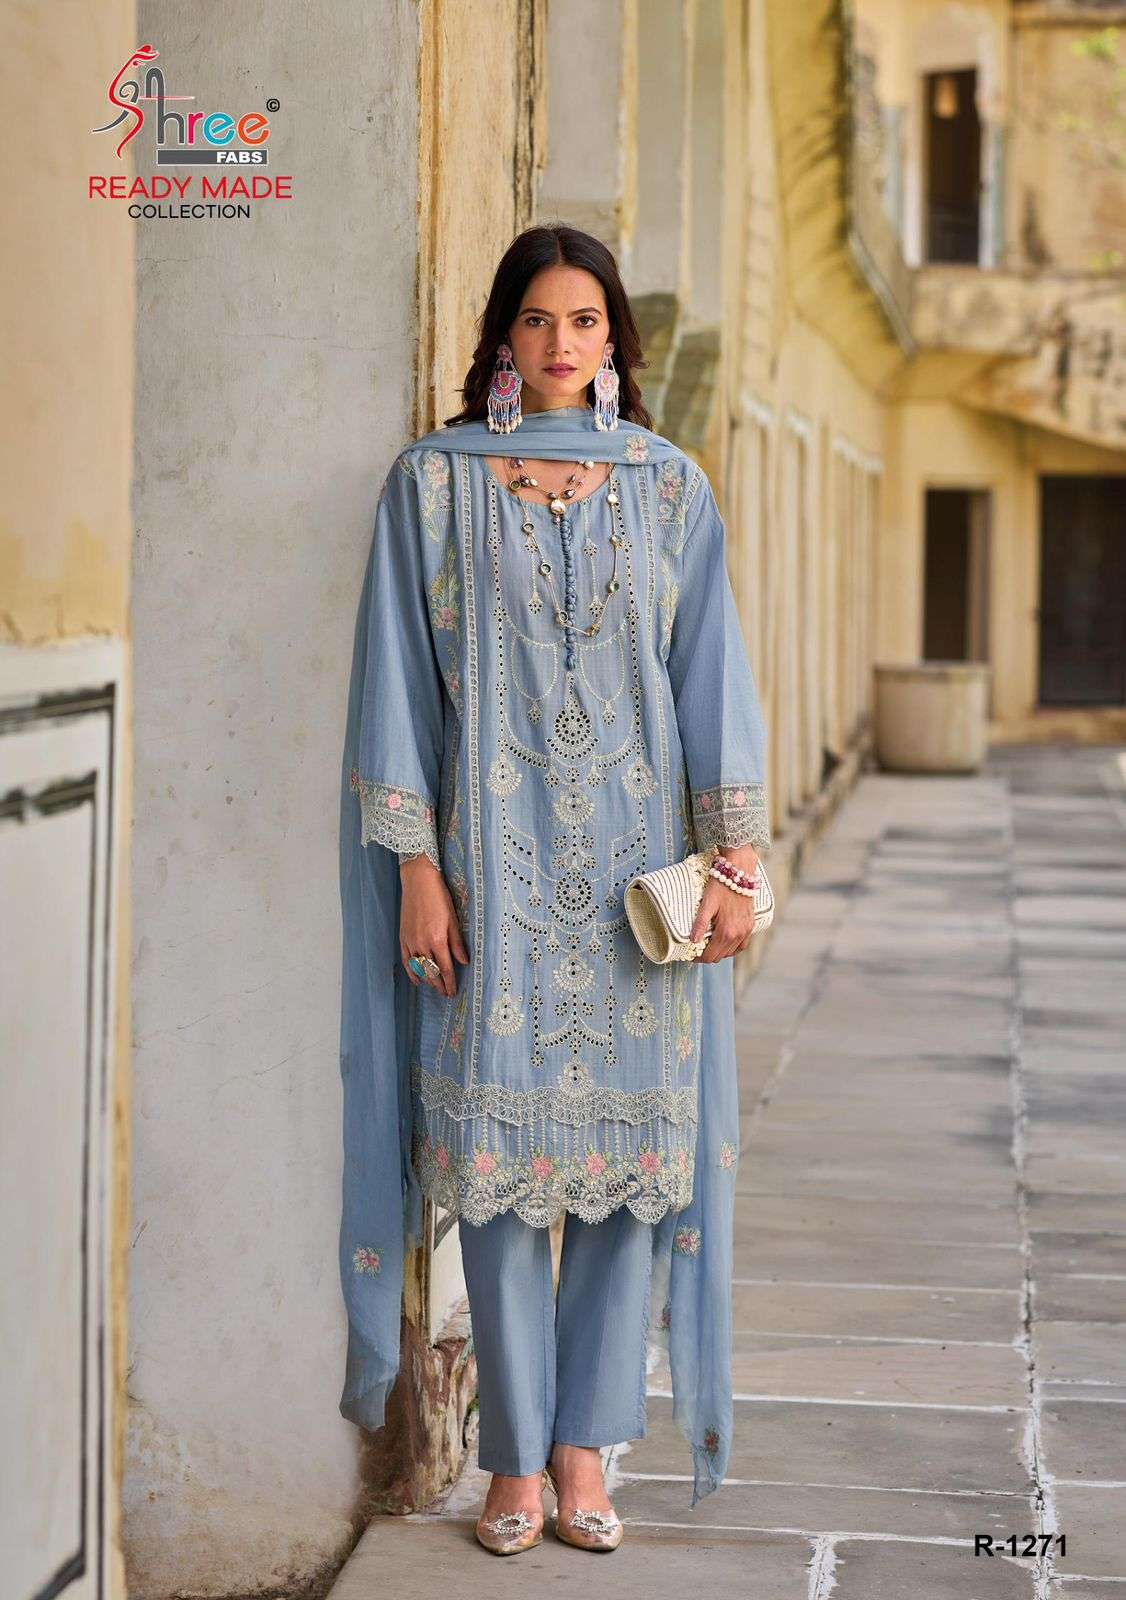 shree fabs 1271 colours latest designer pakistani salwar suits readymade collection surat gujarat 